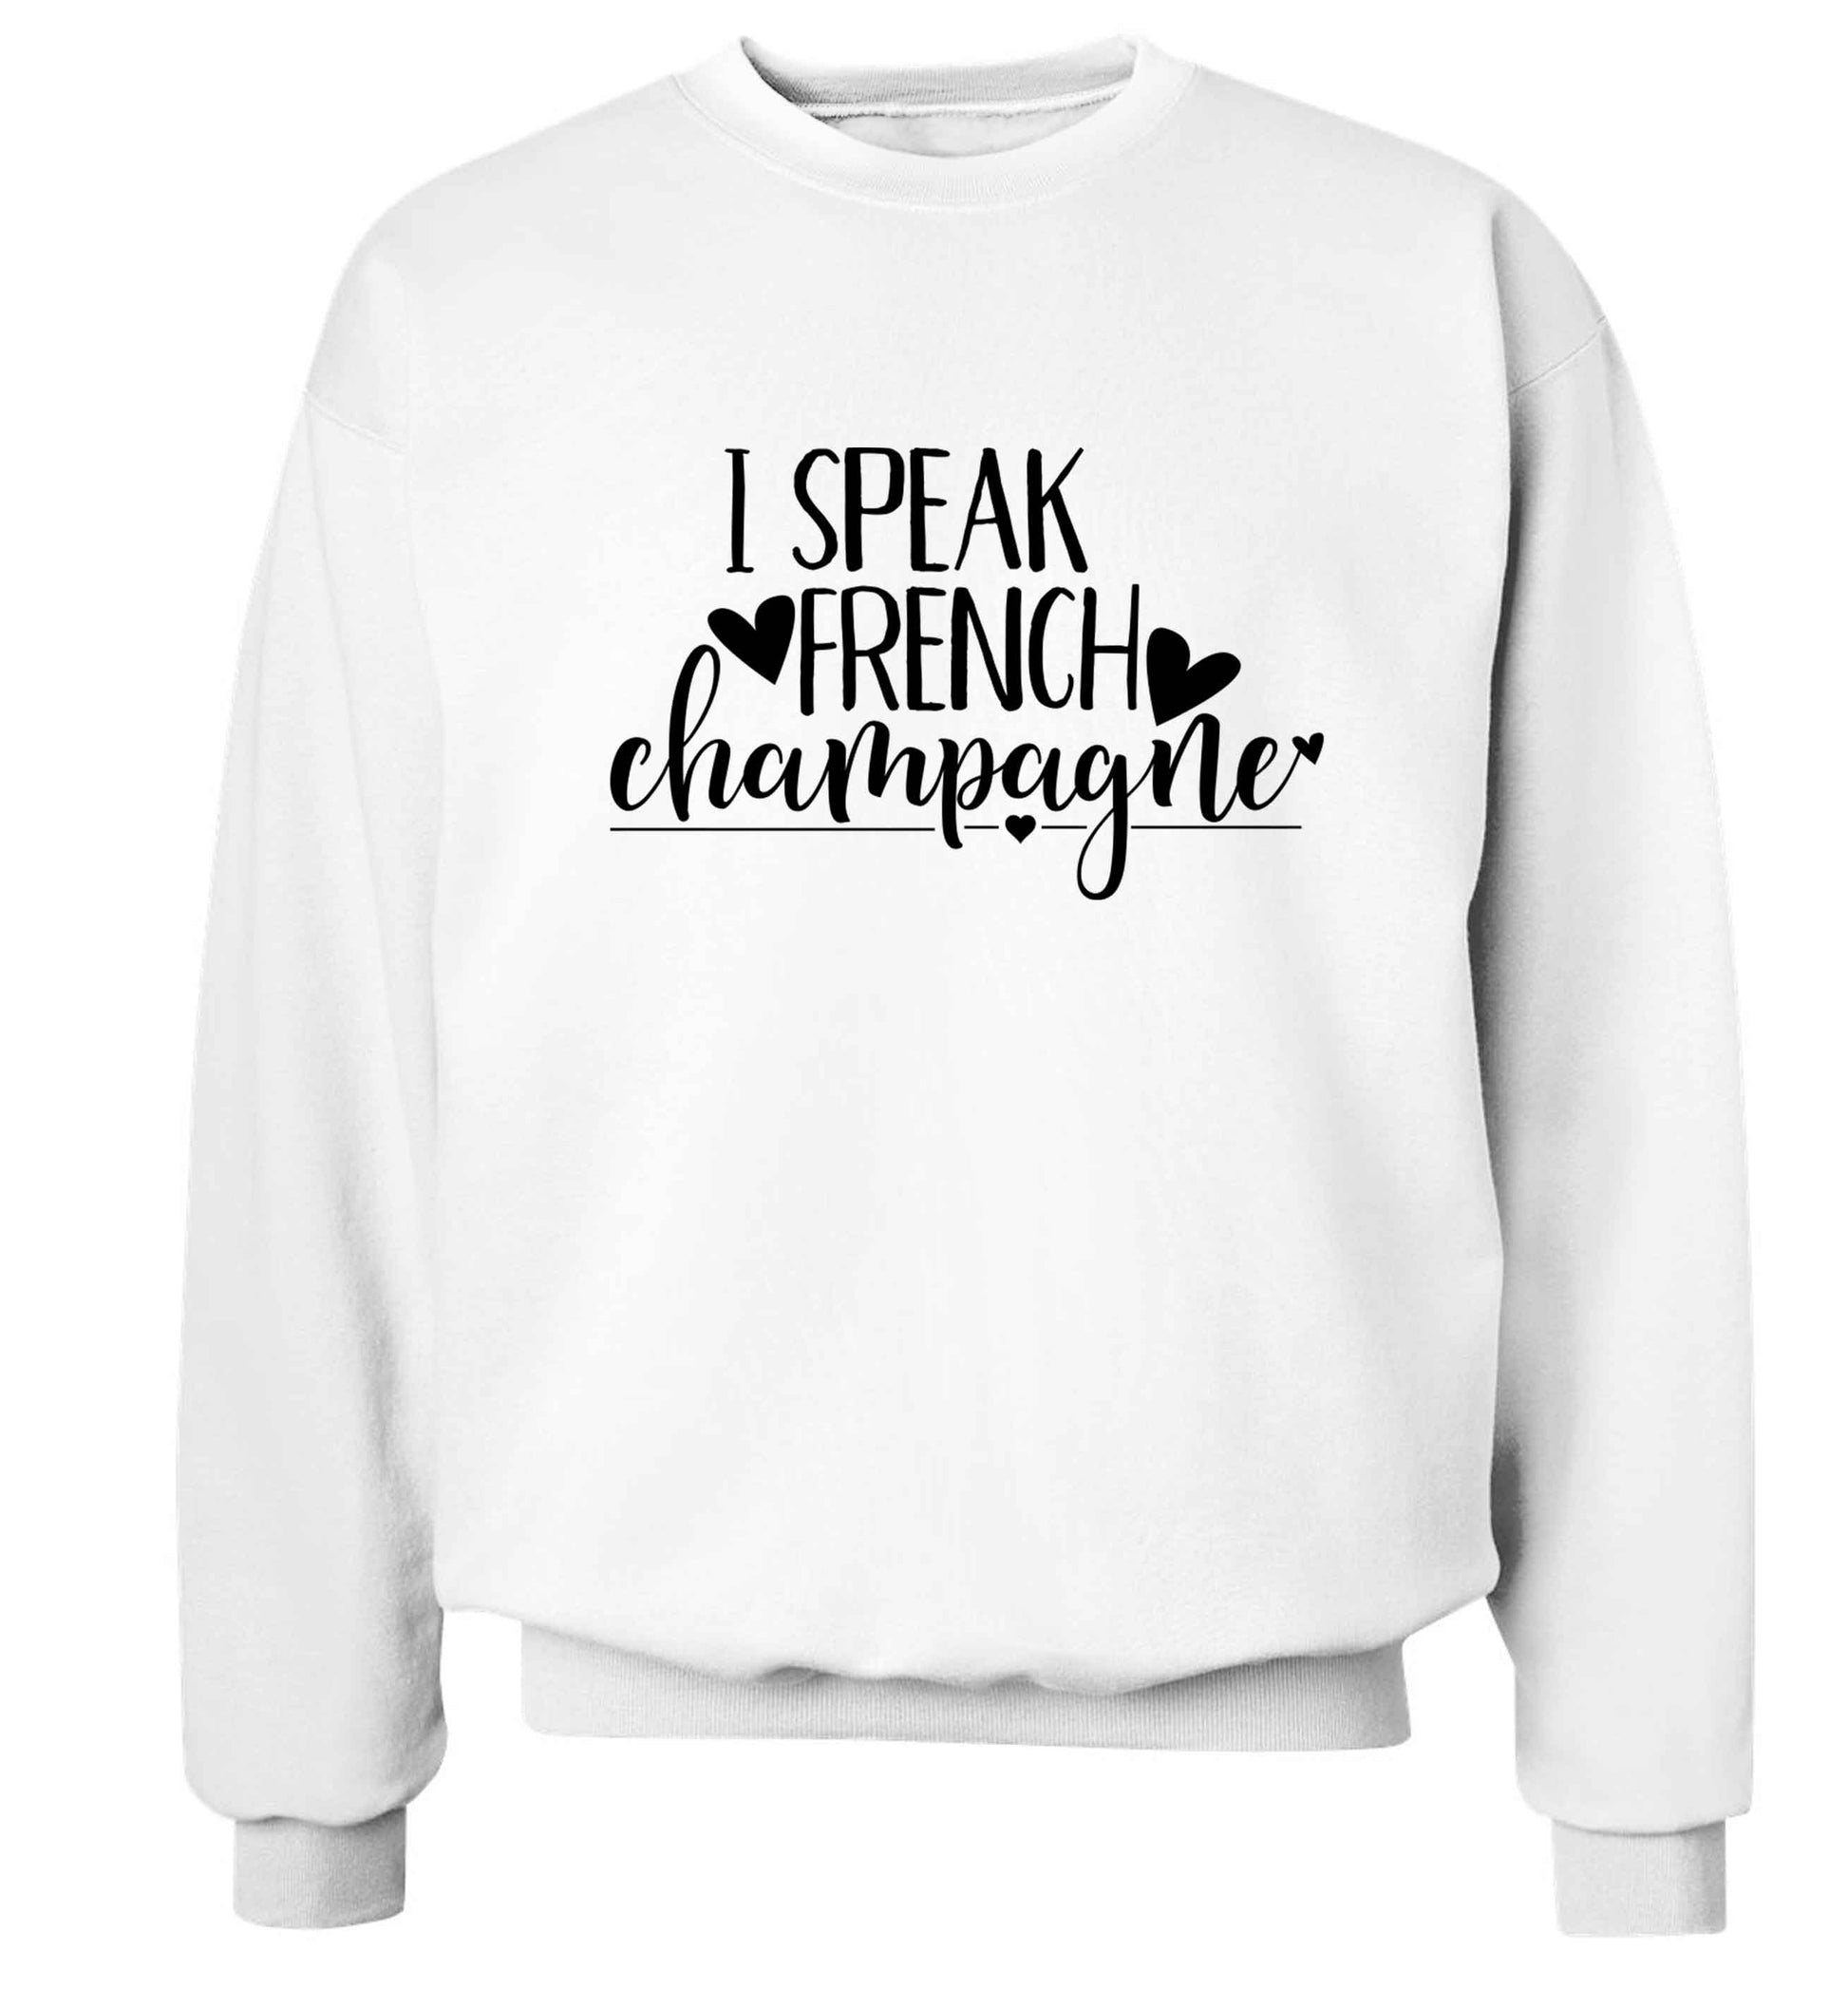 I speak french champagne Adult's unisex white Sweater 2XL